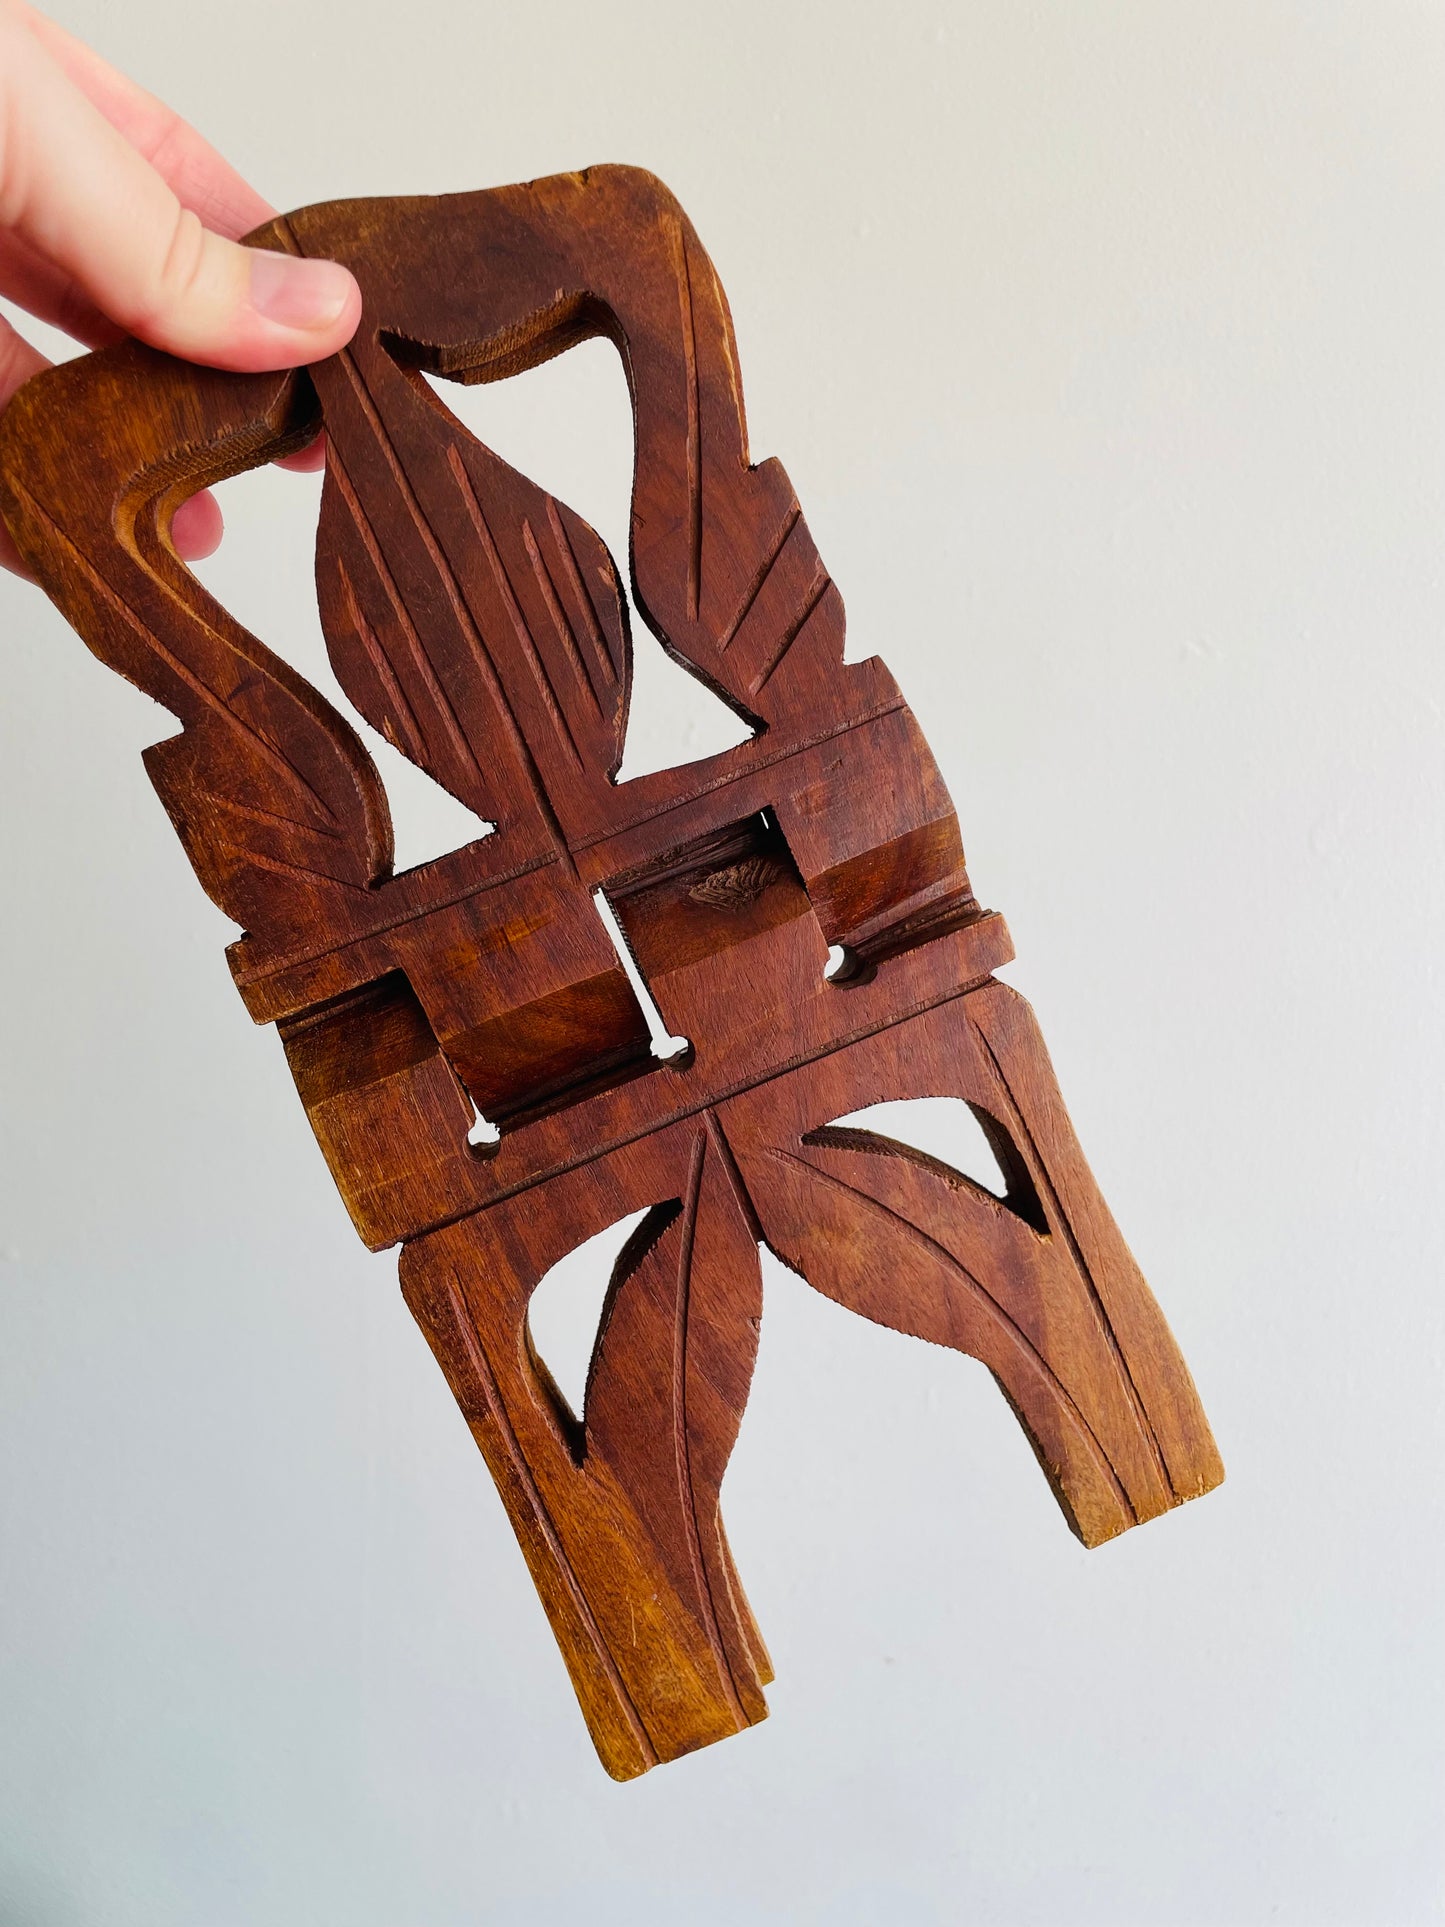 Carved Wooden Book Holder Stand